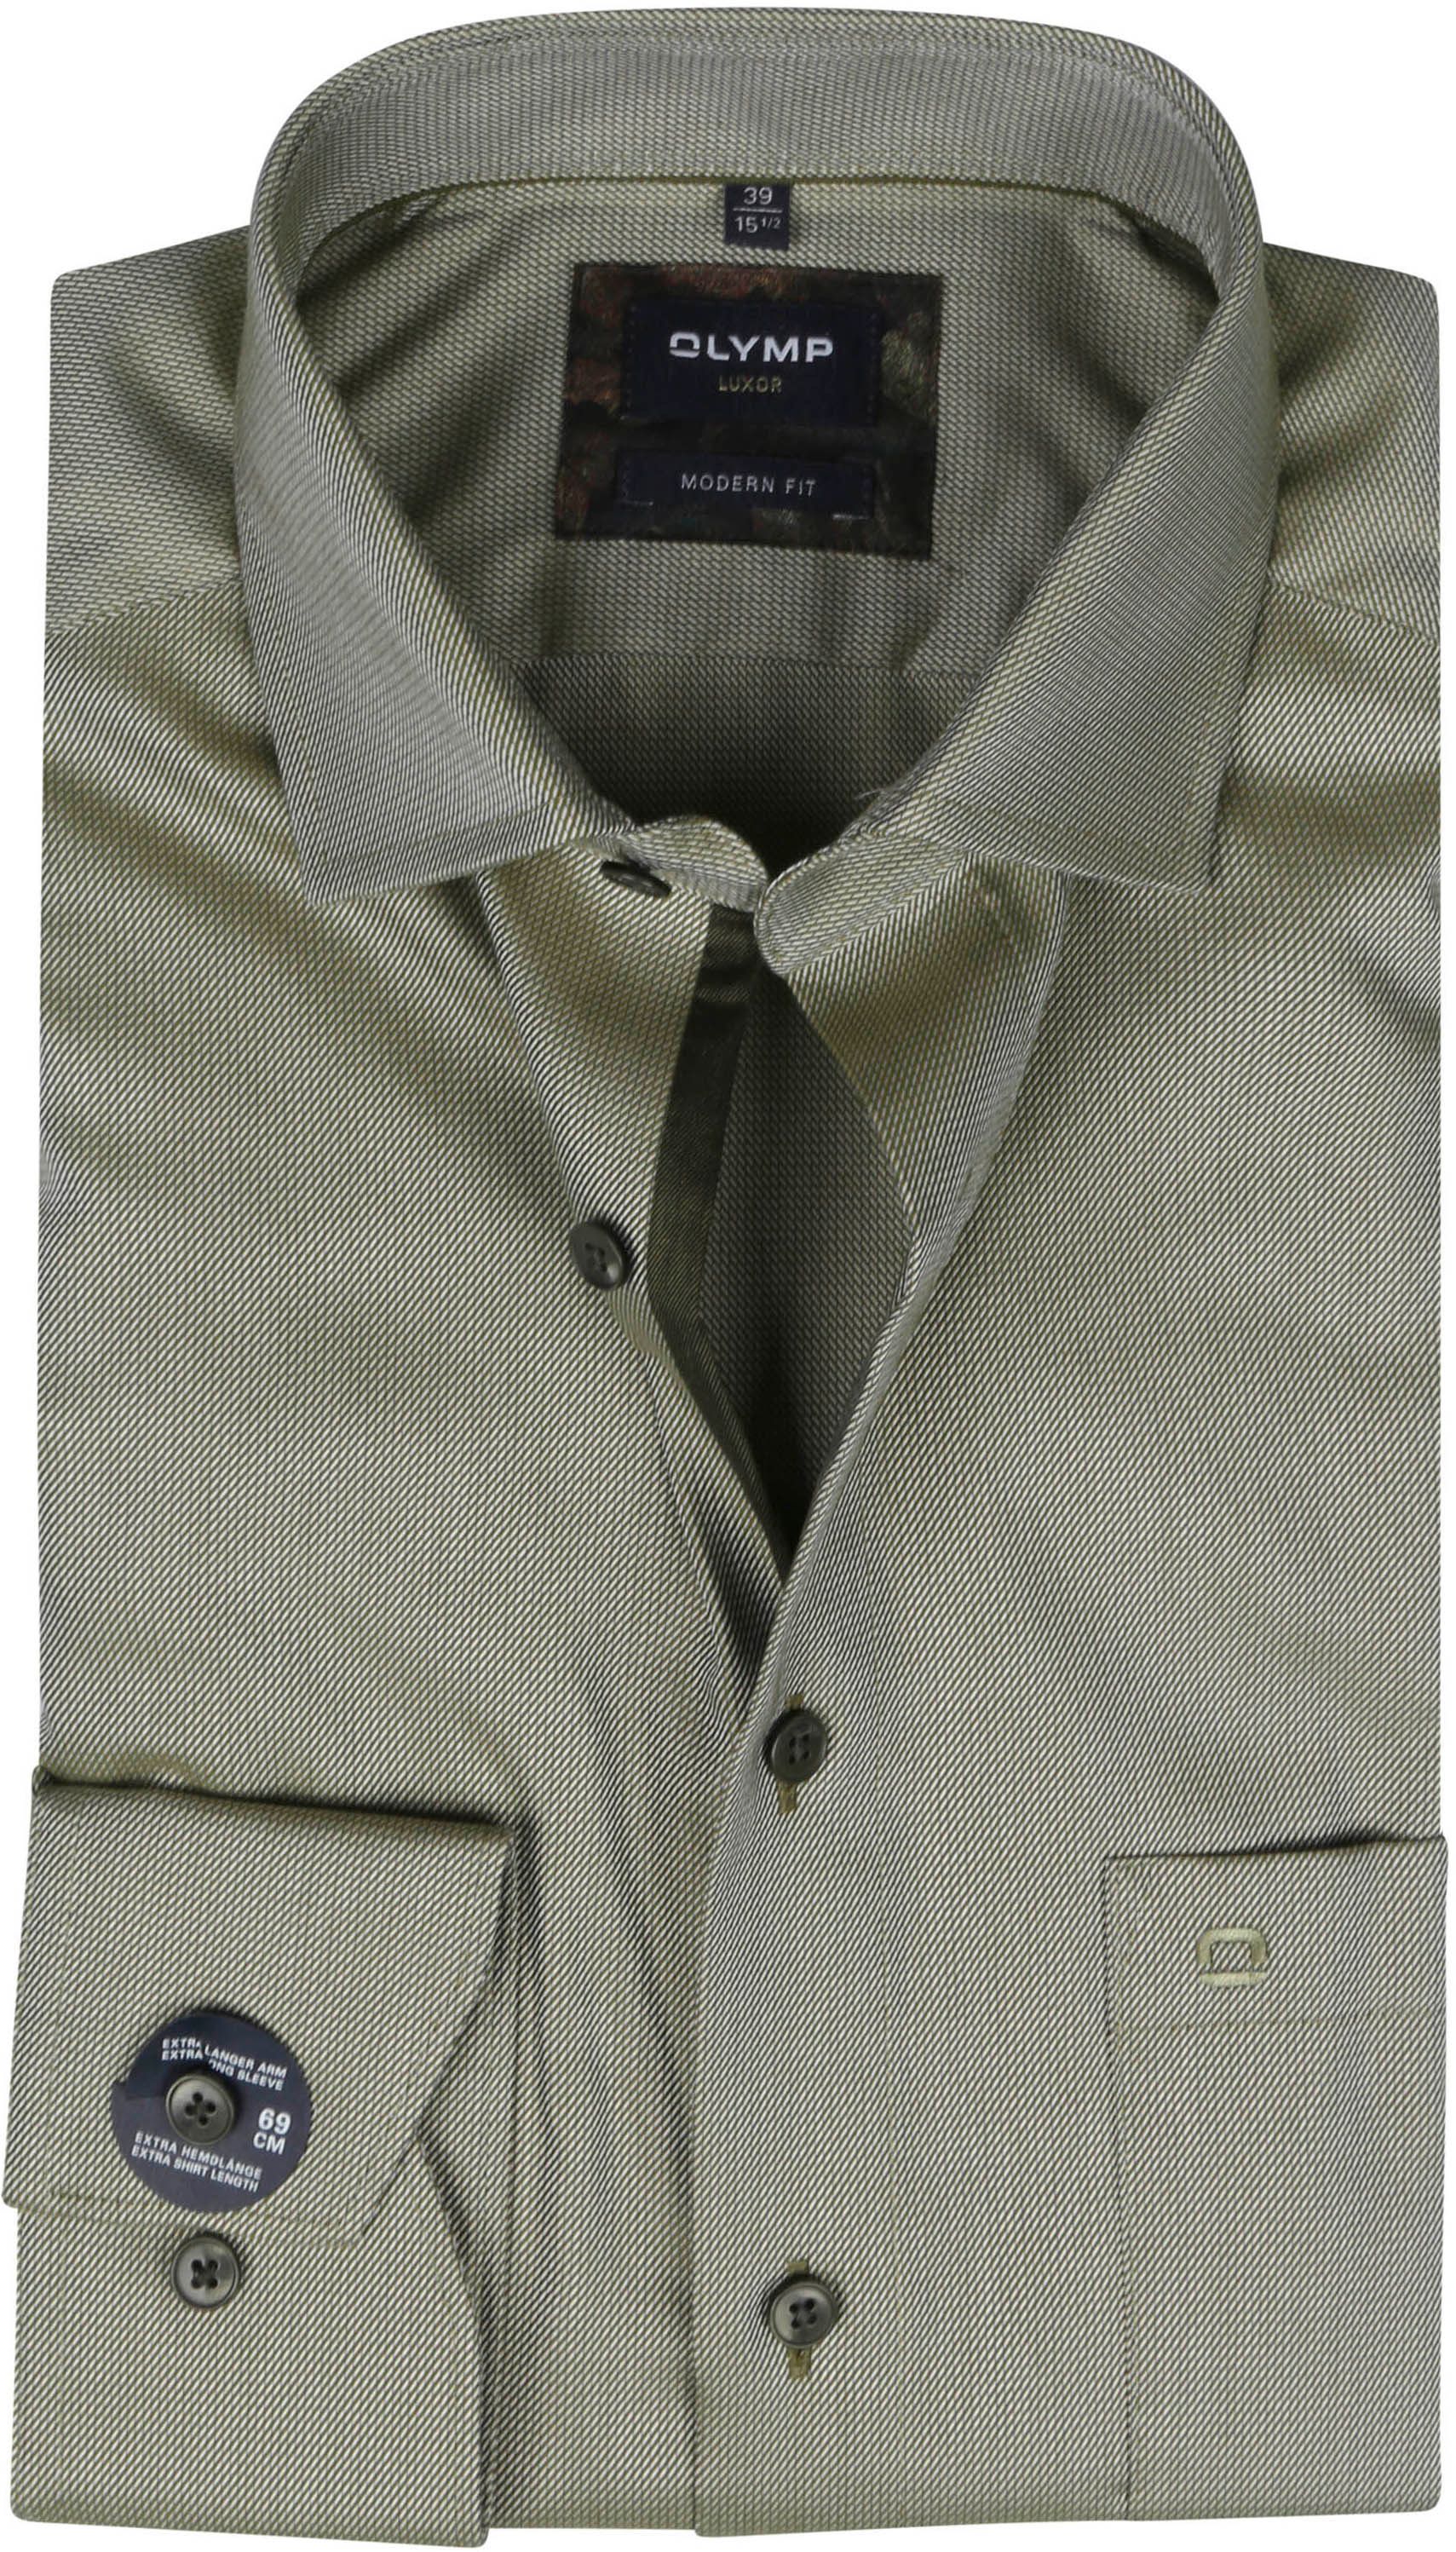 OLYMP Luxor Modern Fit Extra Long Sleeve Shirt Print Green size 15 3/4